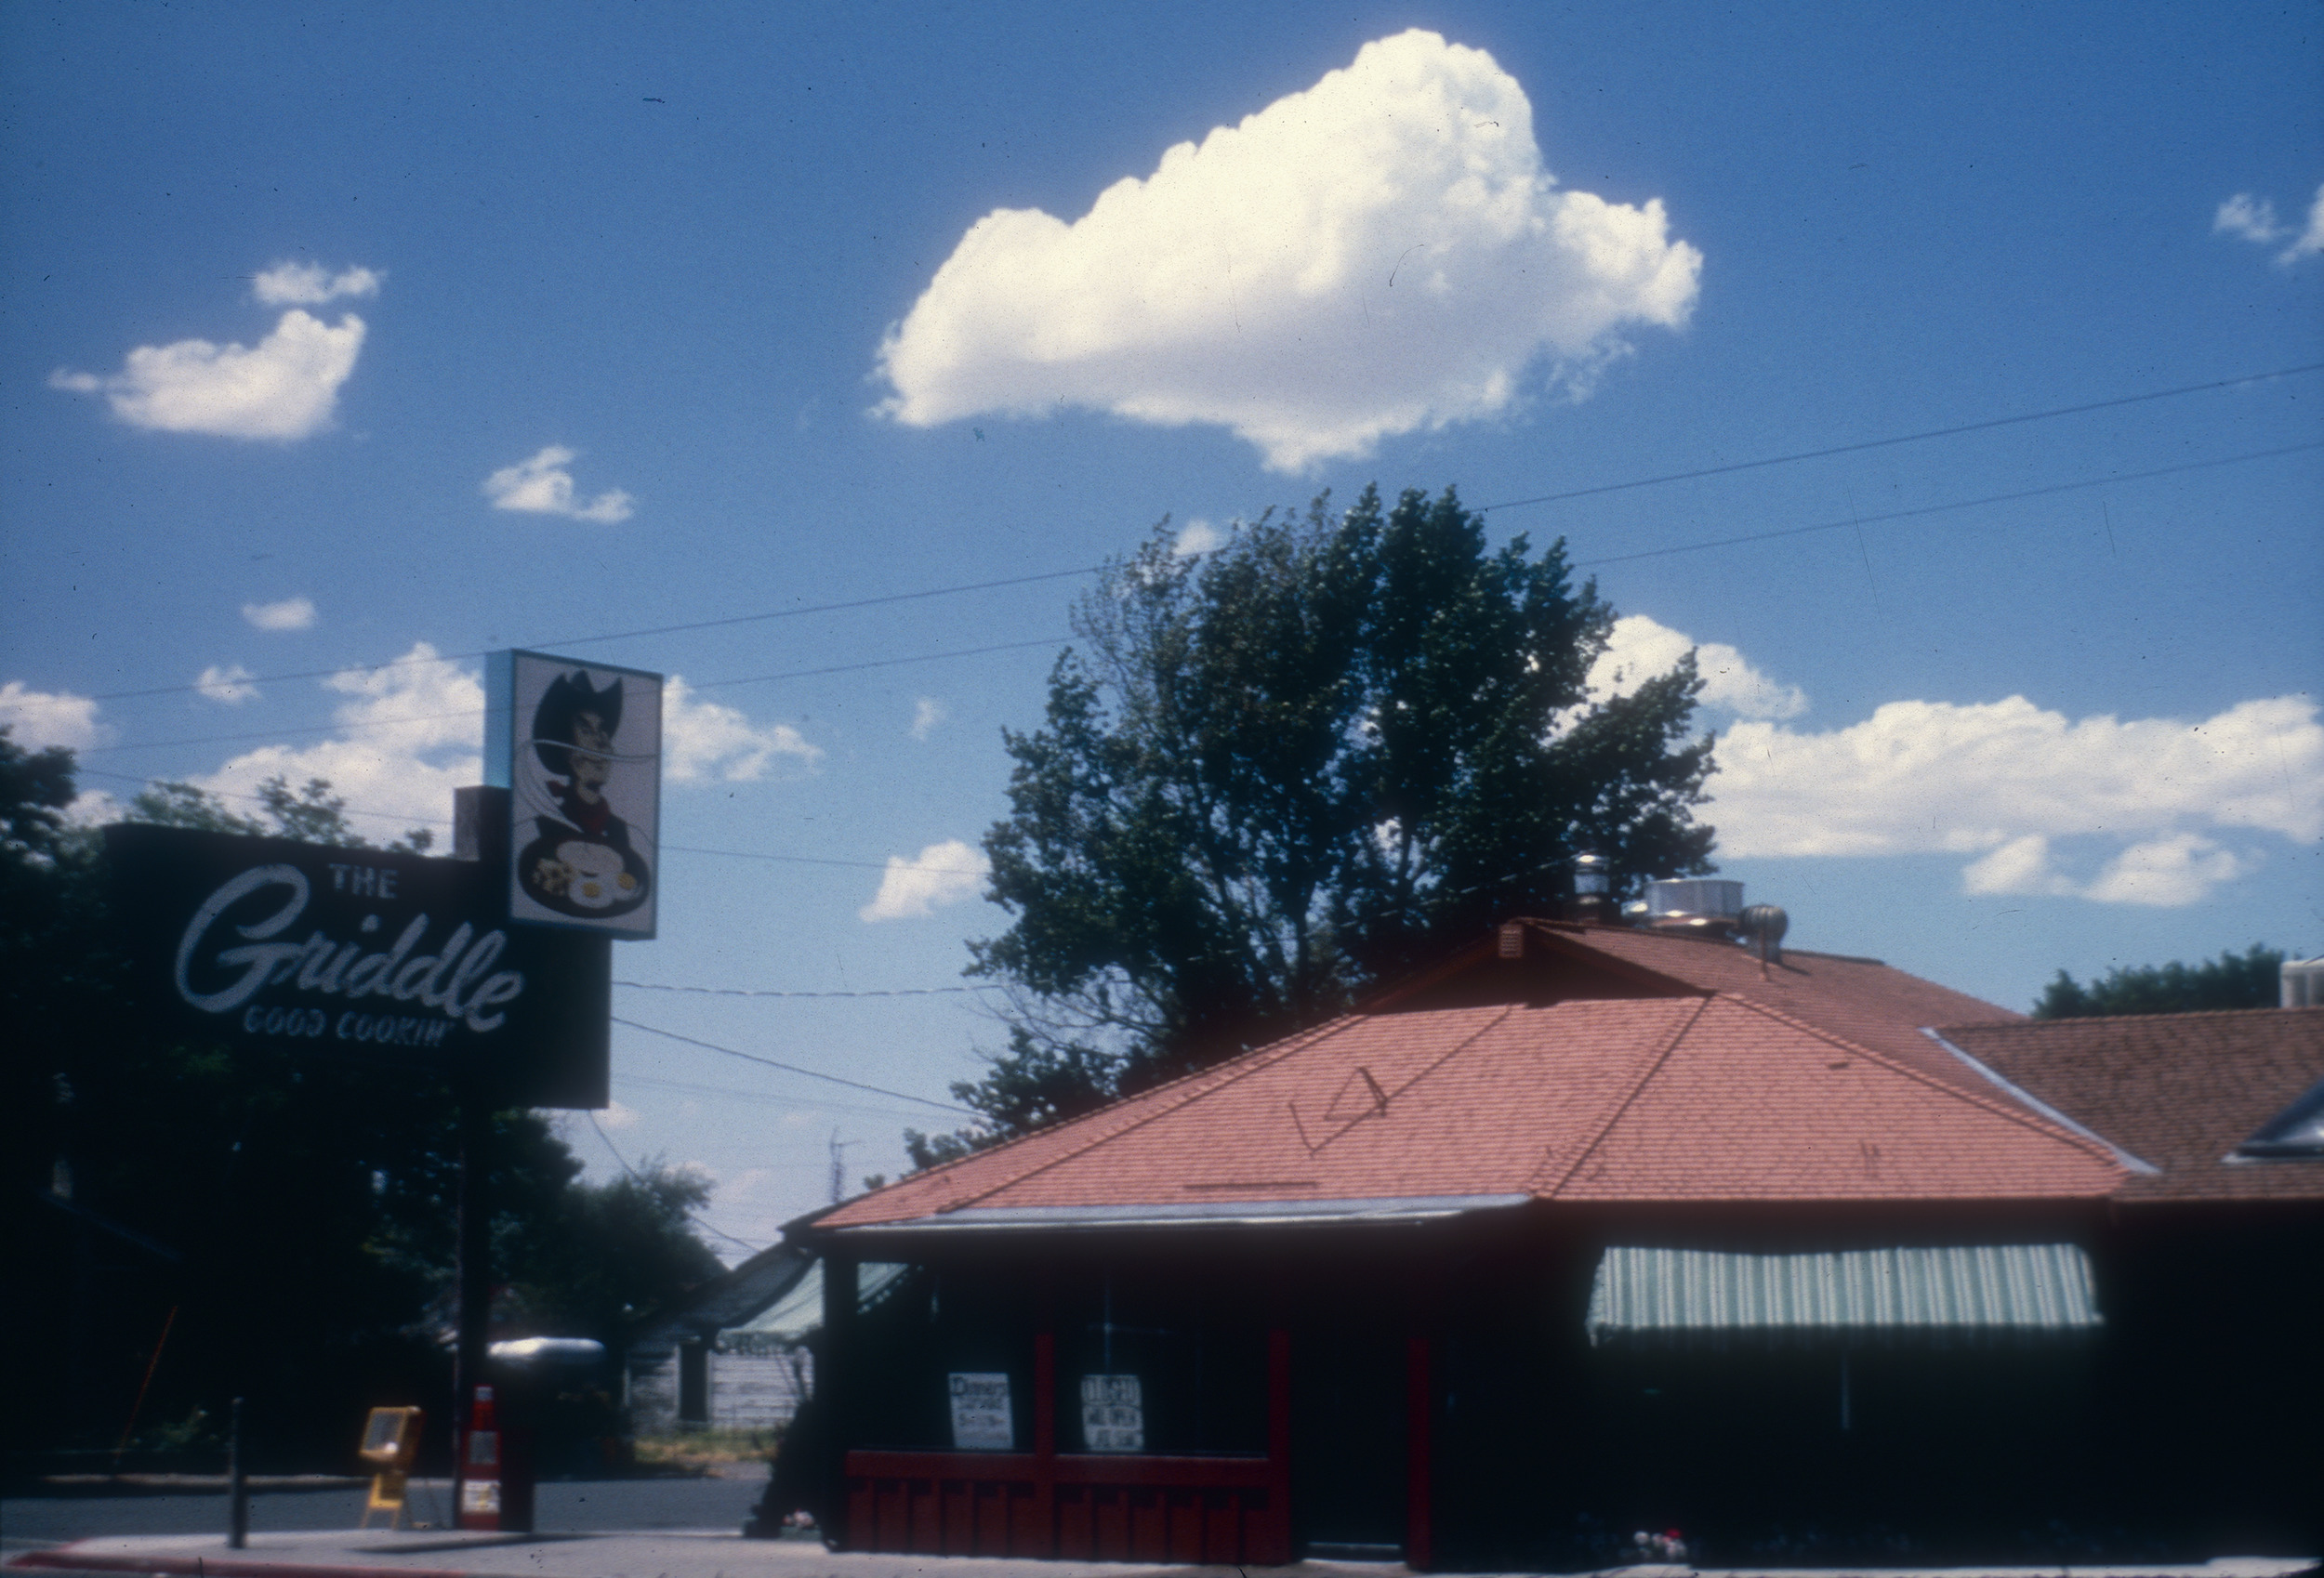 Slide of the exterior of The Griddle restaurant, Winnemucca, Nevada, 1986